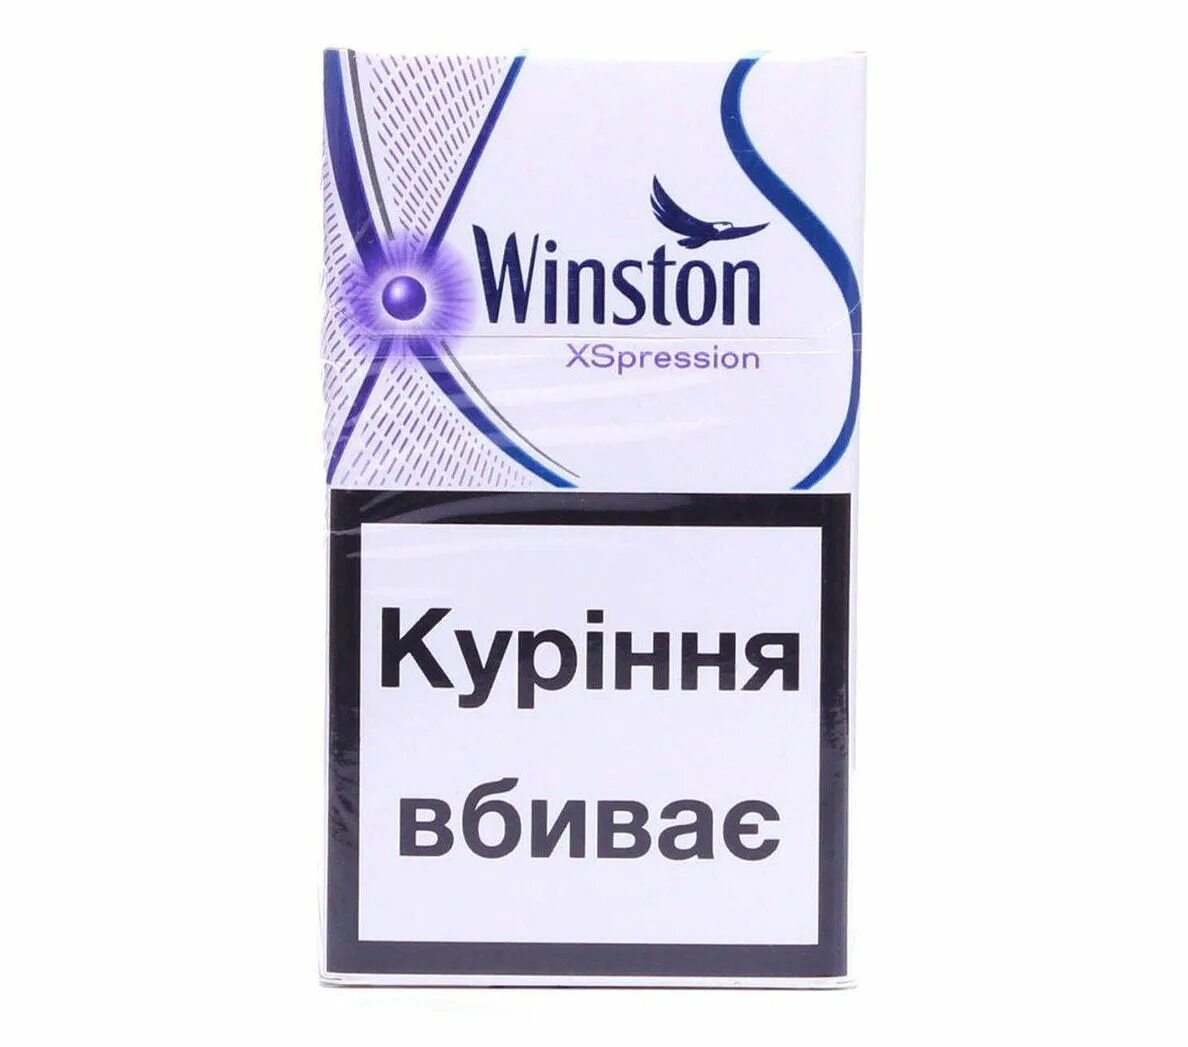 Винстон компакт фиолетовый. Сигареты Winston XSPRESSION. Сигареты Winston XS XSPRESSION Impulse. Winston XSPRESSION Purple. Winston XS Impulse Compact.